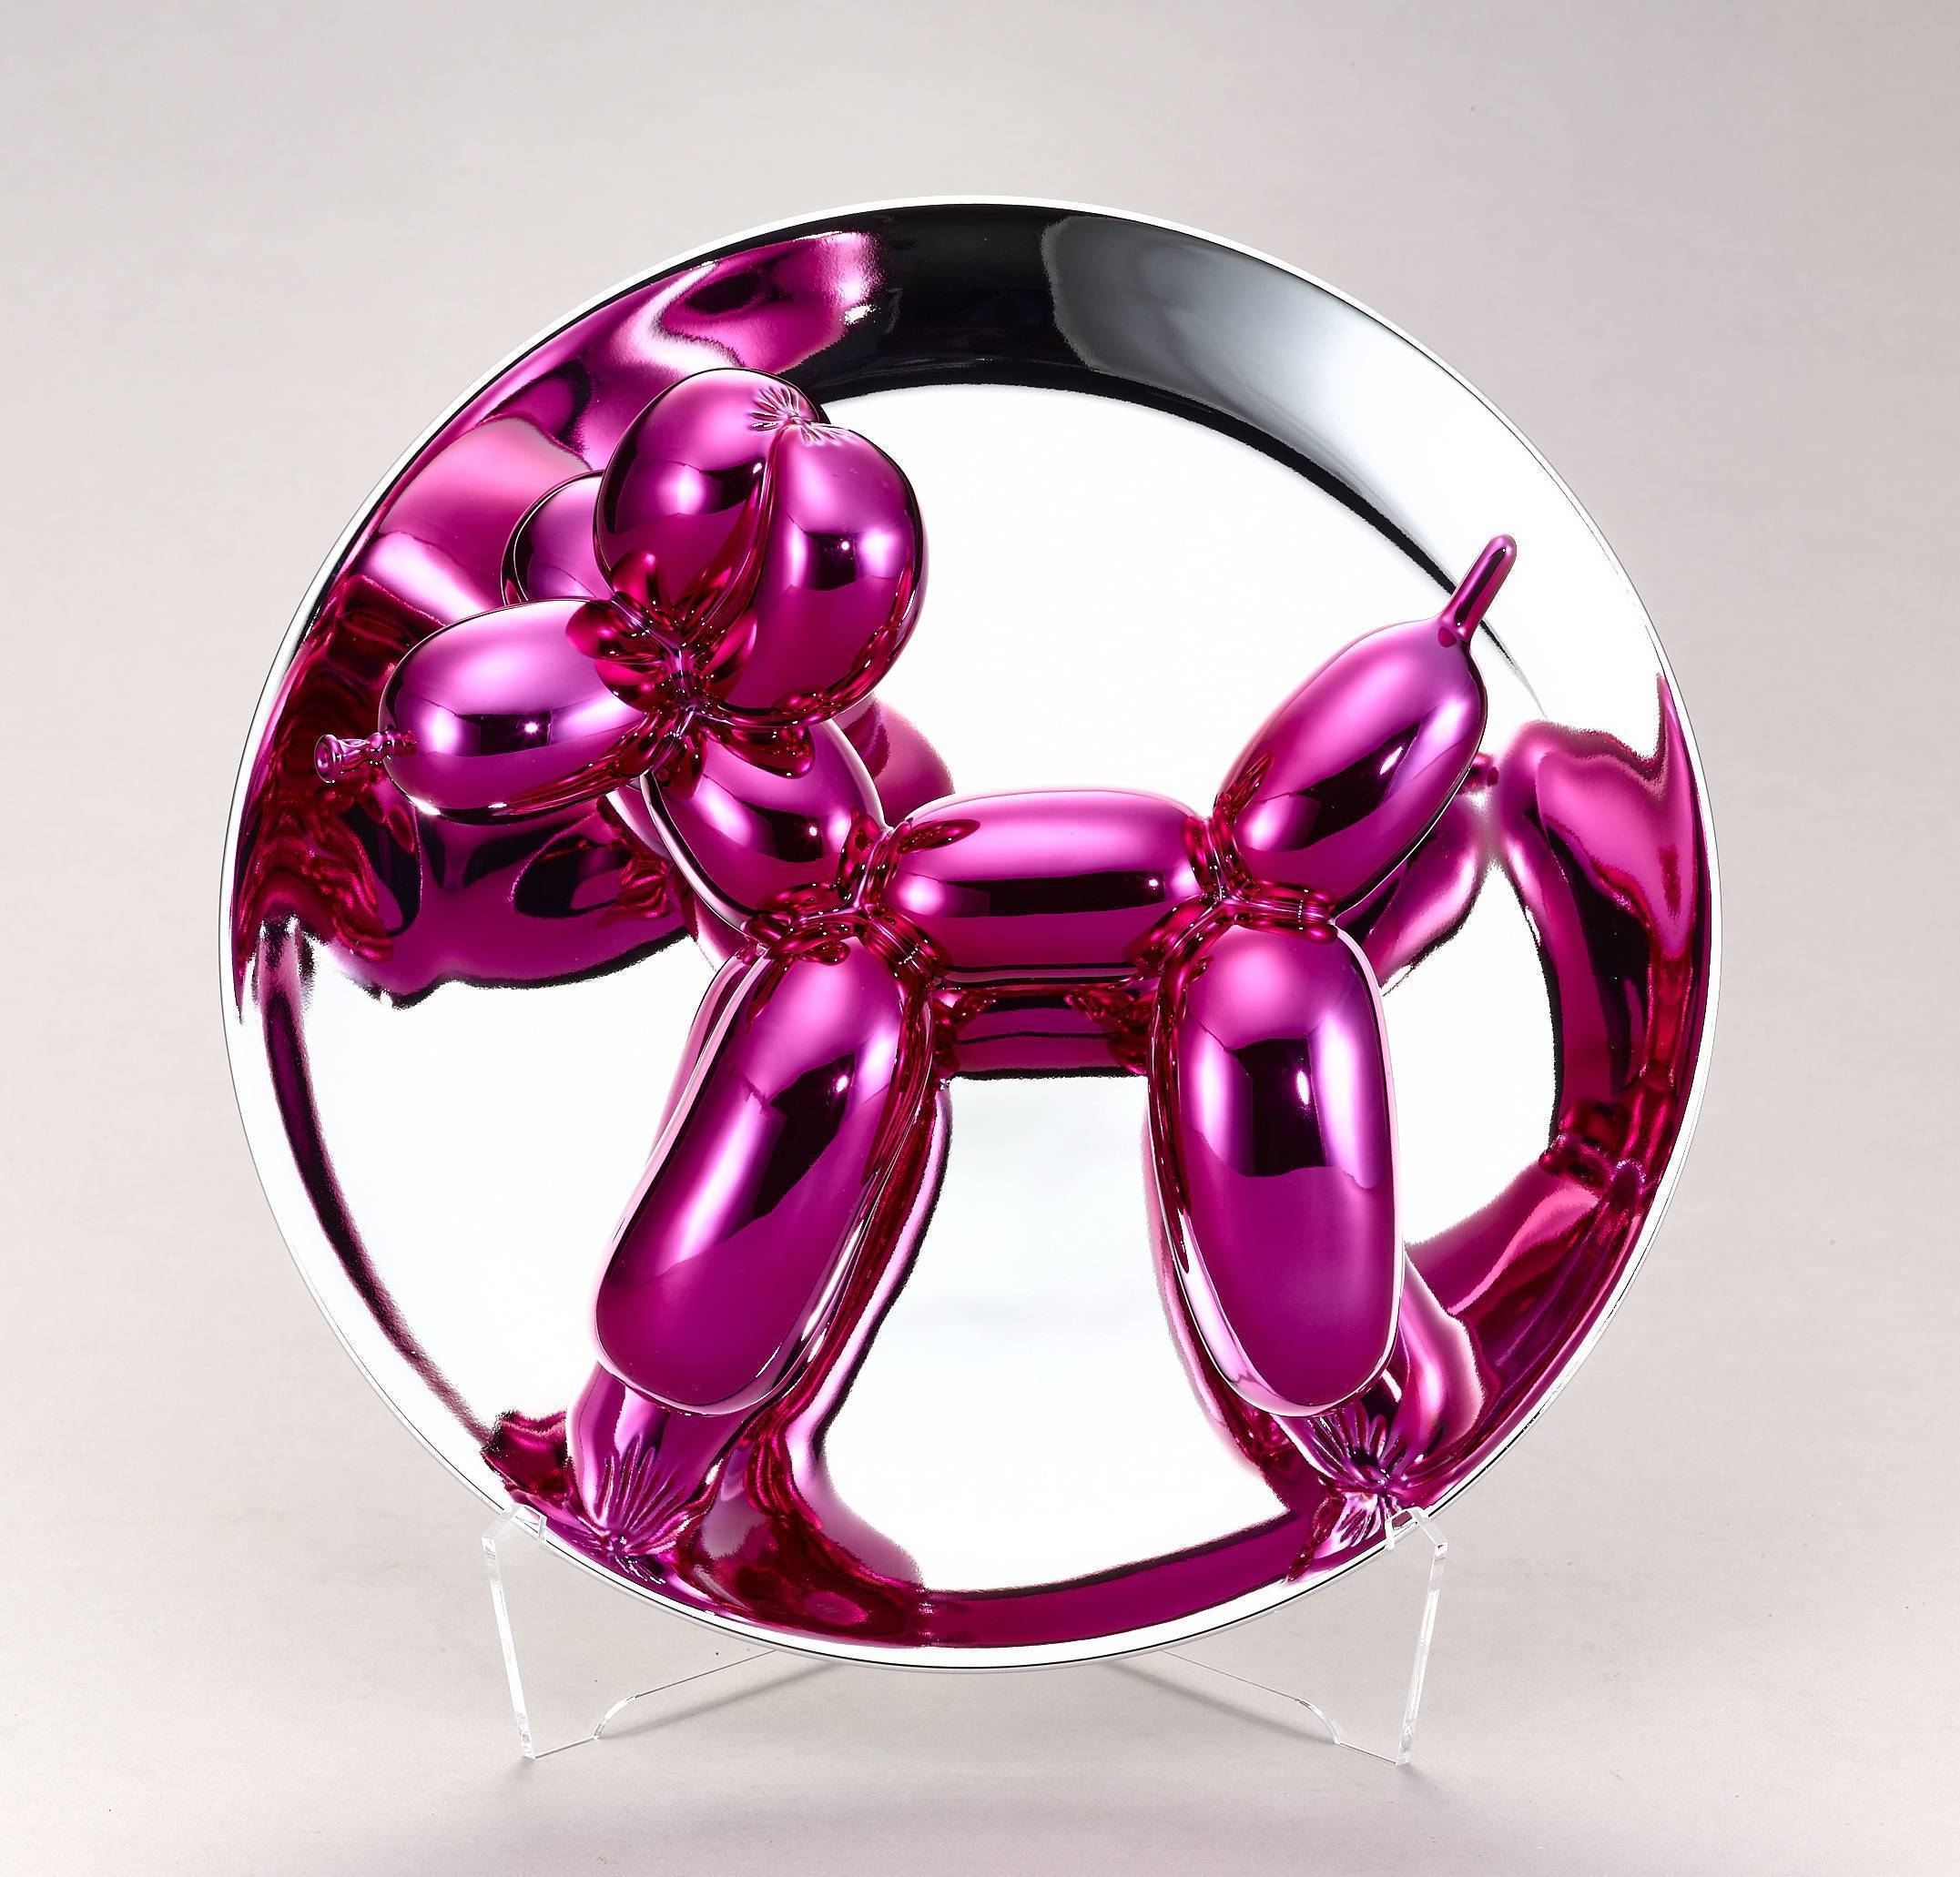 Balloon Dog (magenta) 氣球狗 （洋紅）｜2015｜ 26.7 x 26.7 x 12.7 cm｜Porcelain 陶瓷｜© Jeff Koons